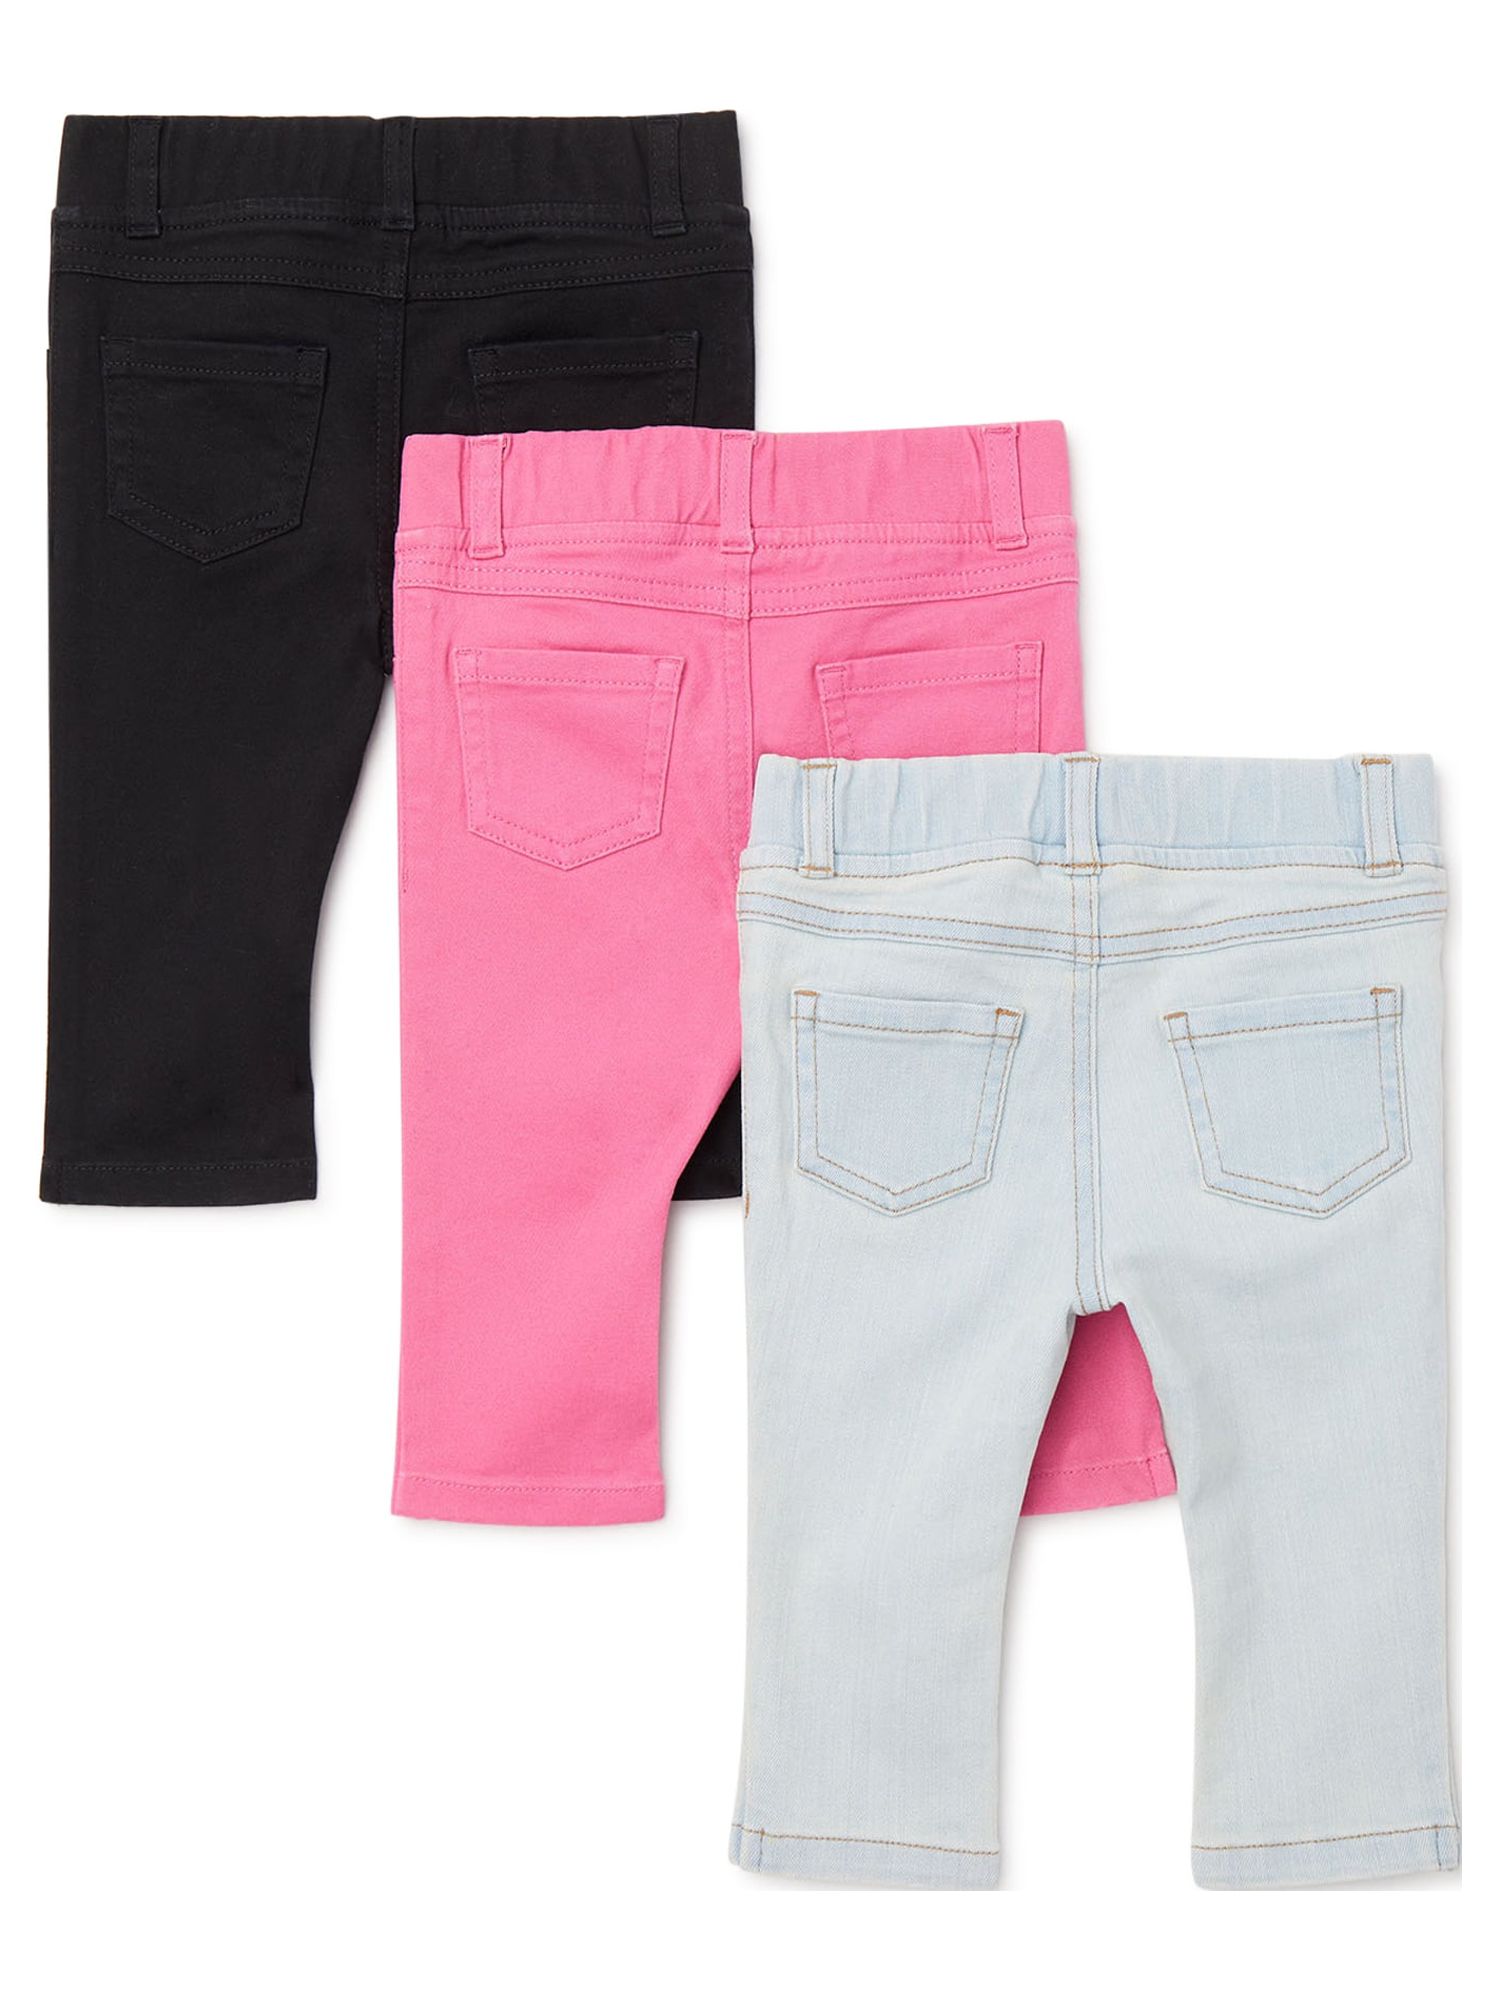 Garanimals Baby Girls' Skinny Jeans, 3-Pack - image 2 of 4